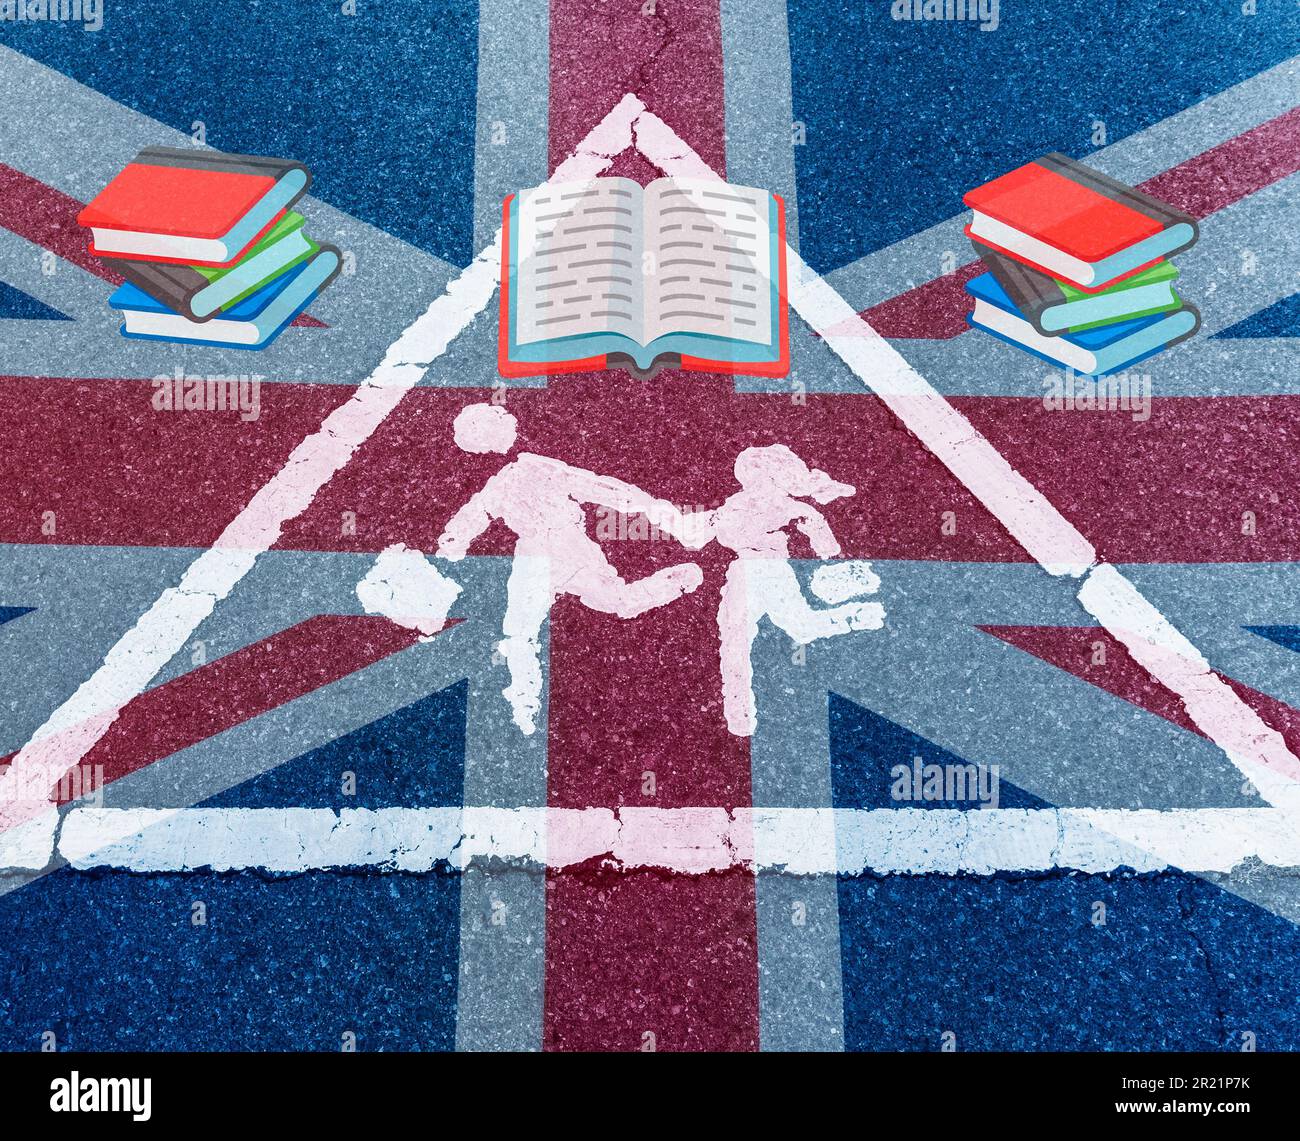 Primary school literacy, reading, uk education concept. Stock Photo